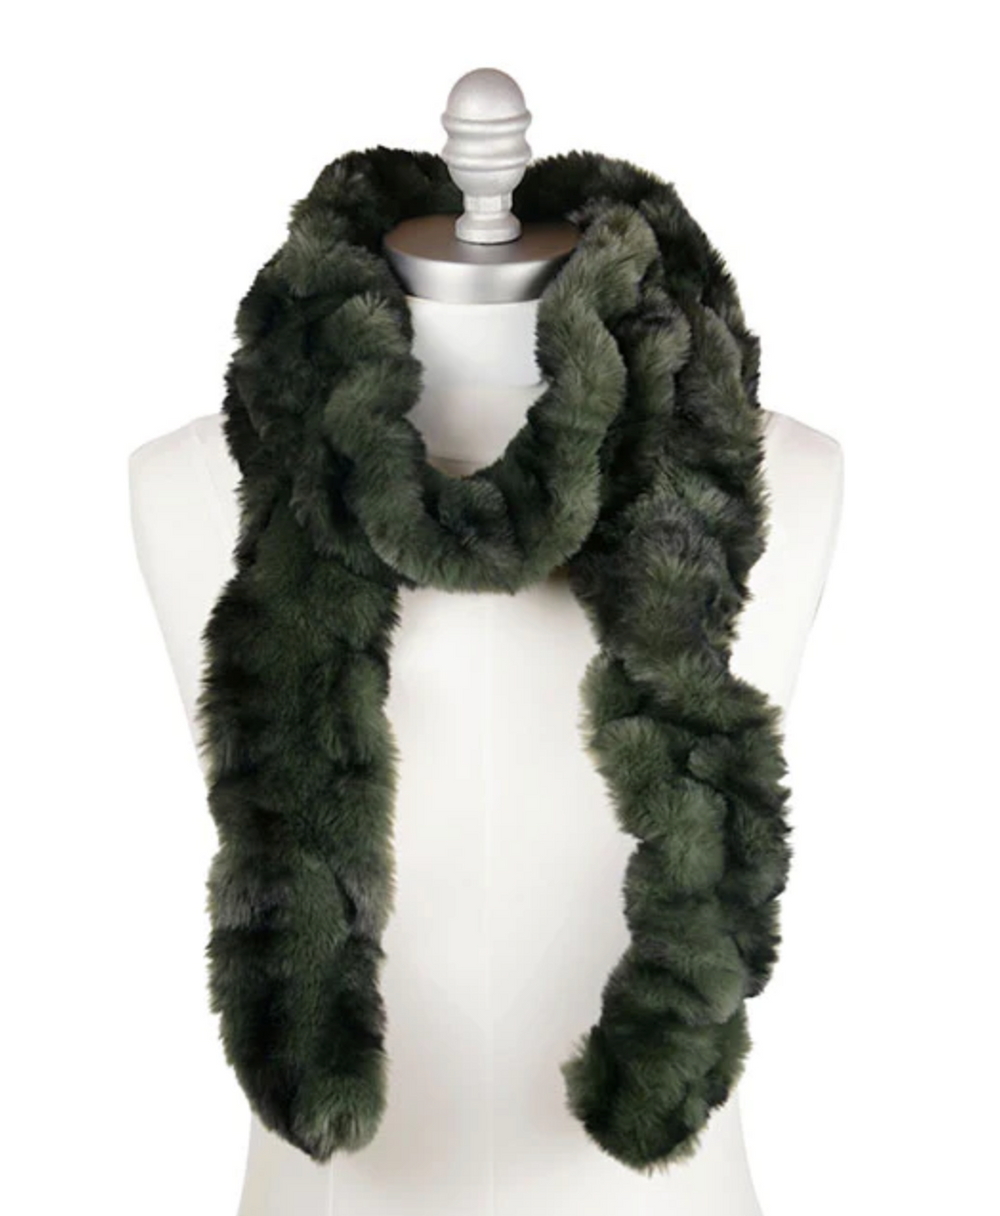 Pandemonium faux fur scarf, stretch